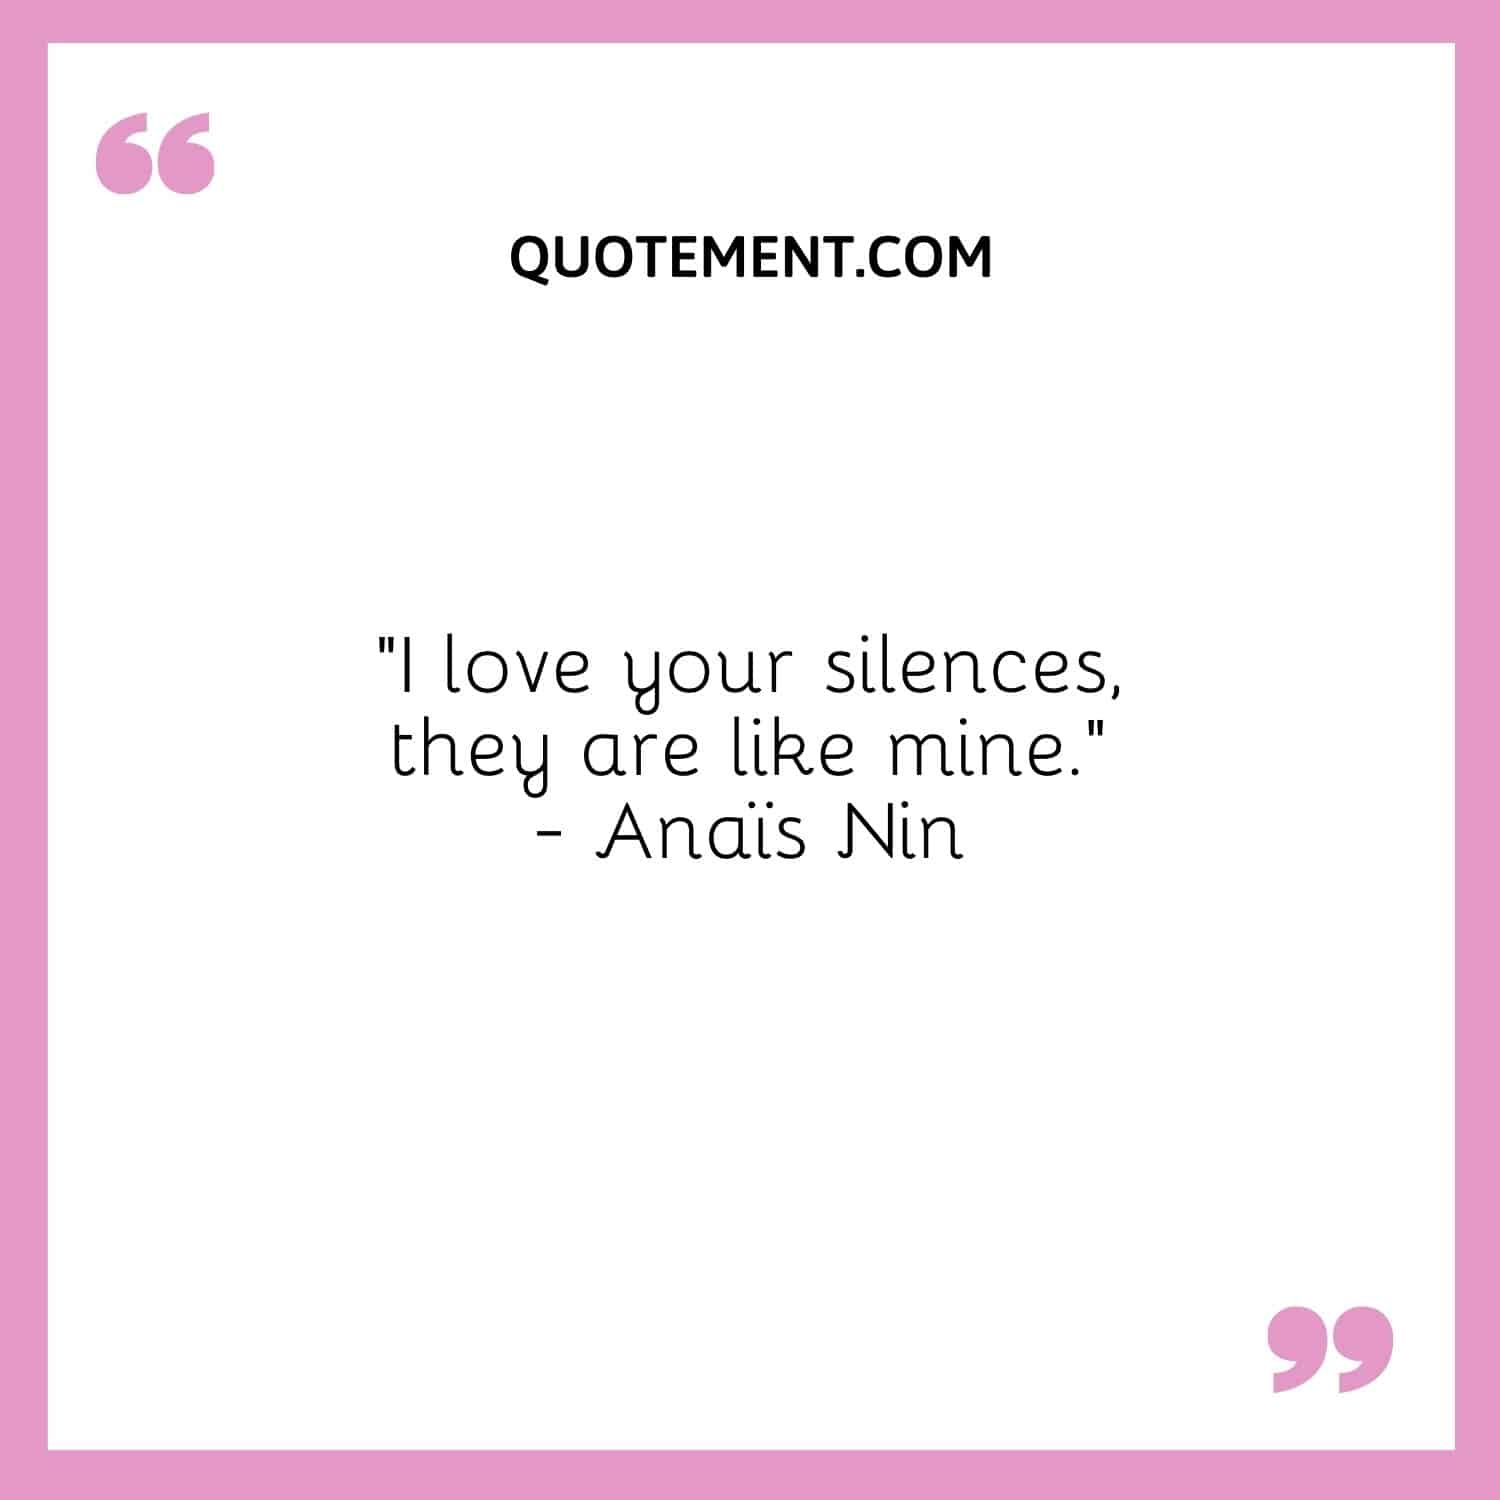 “I love your silences, they are like mine.” — Anaïs Nin